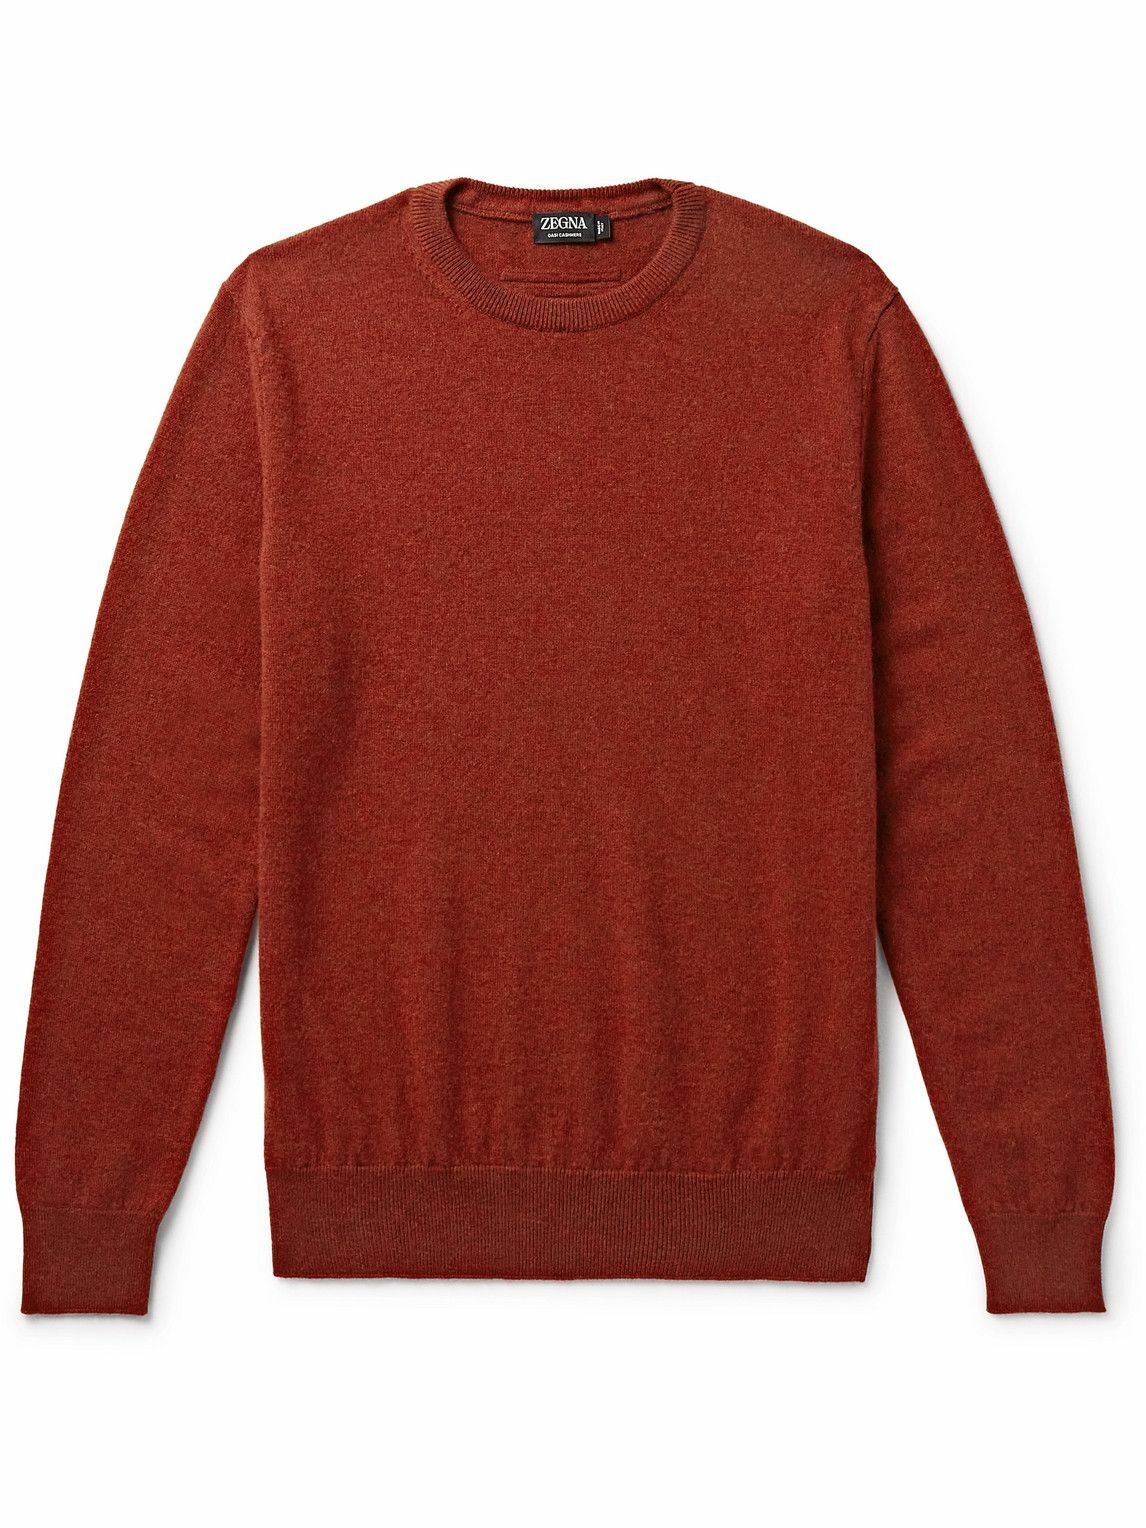 Zegna - Slim-Fit Oasi Cashmere Sweater - Red Zegna